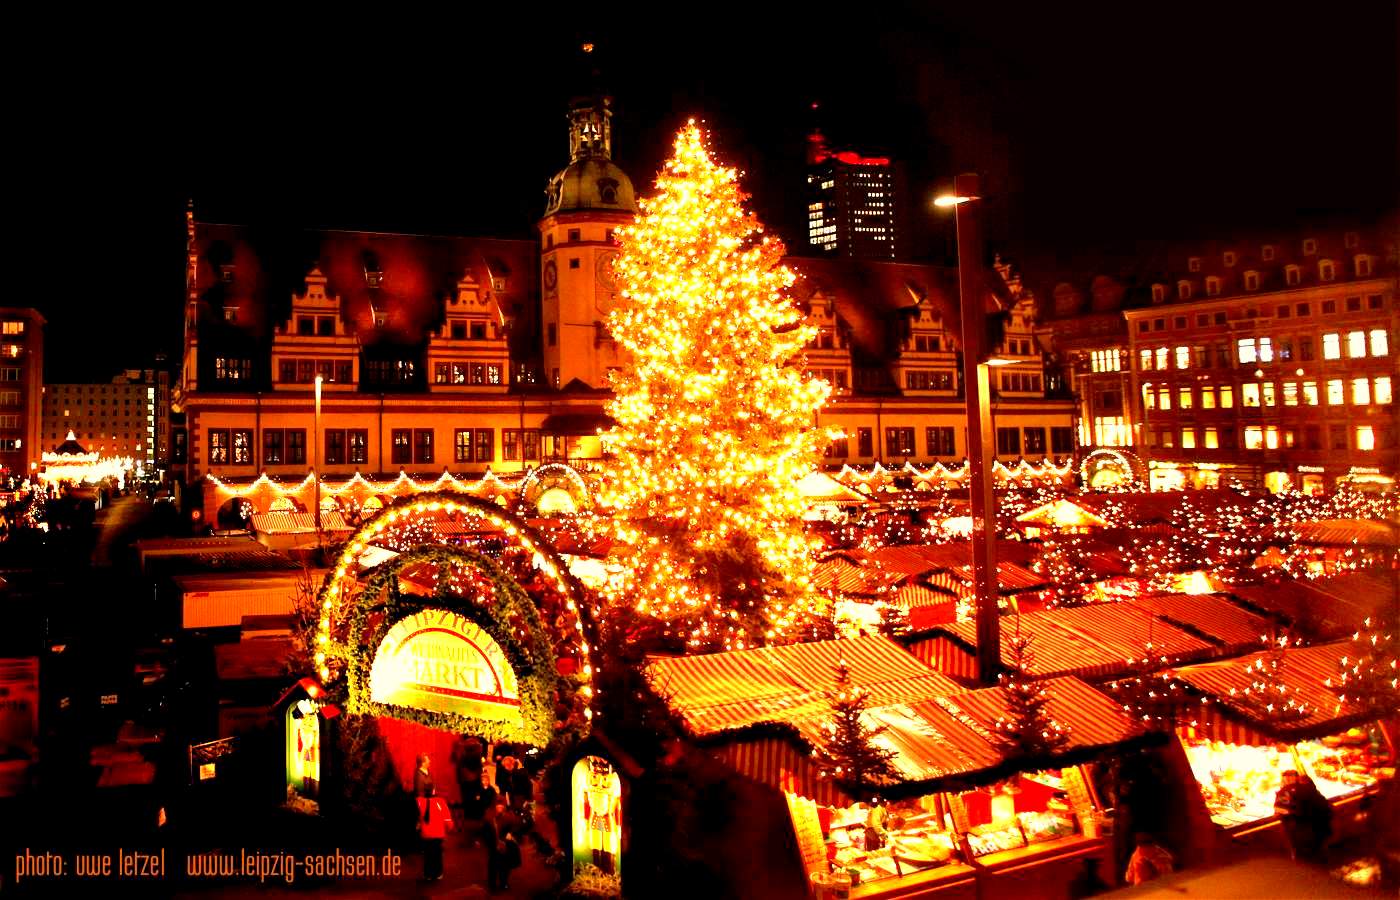 http://www.leipzig-sachsen.de/leipzig/weihnachtsmarkt/leipzig-weihnachtsmarkt_02.jpg